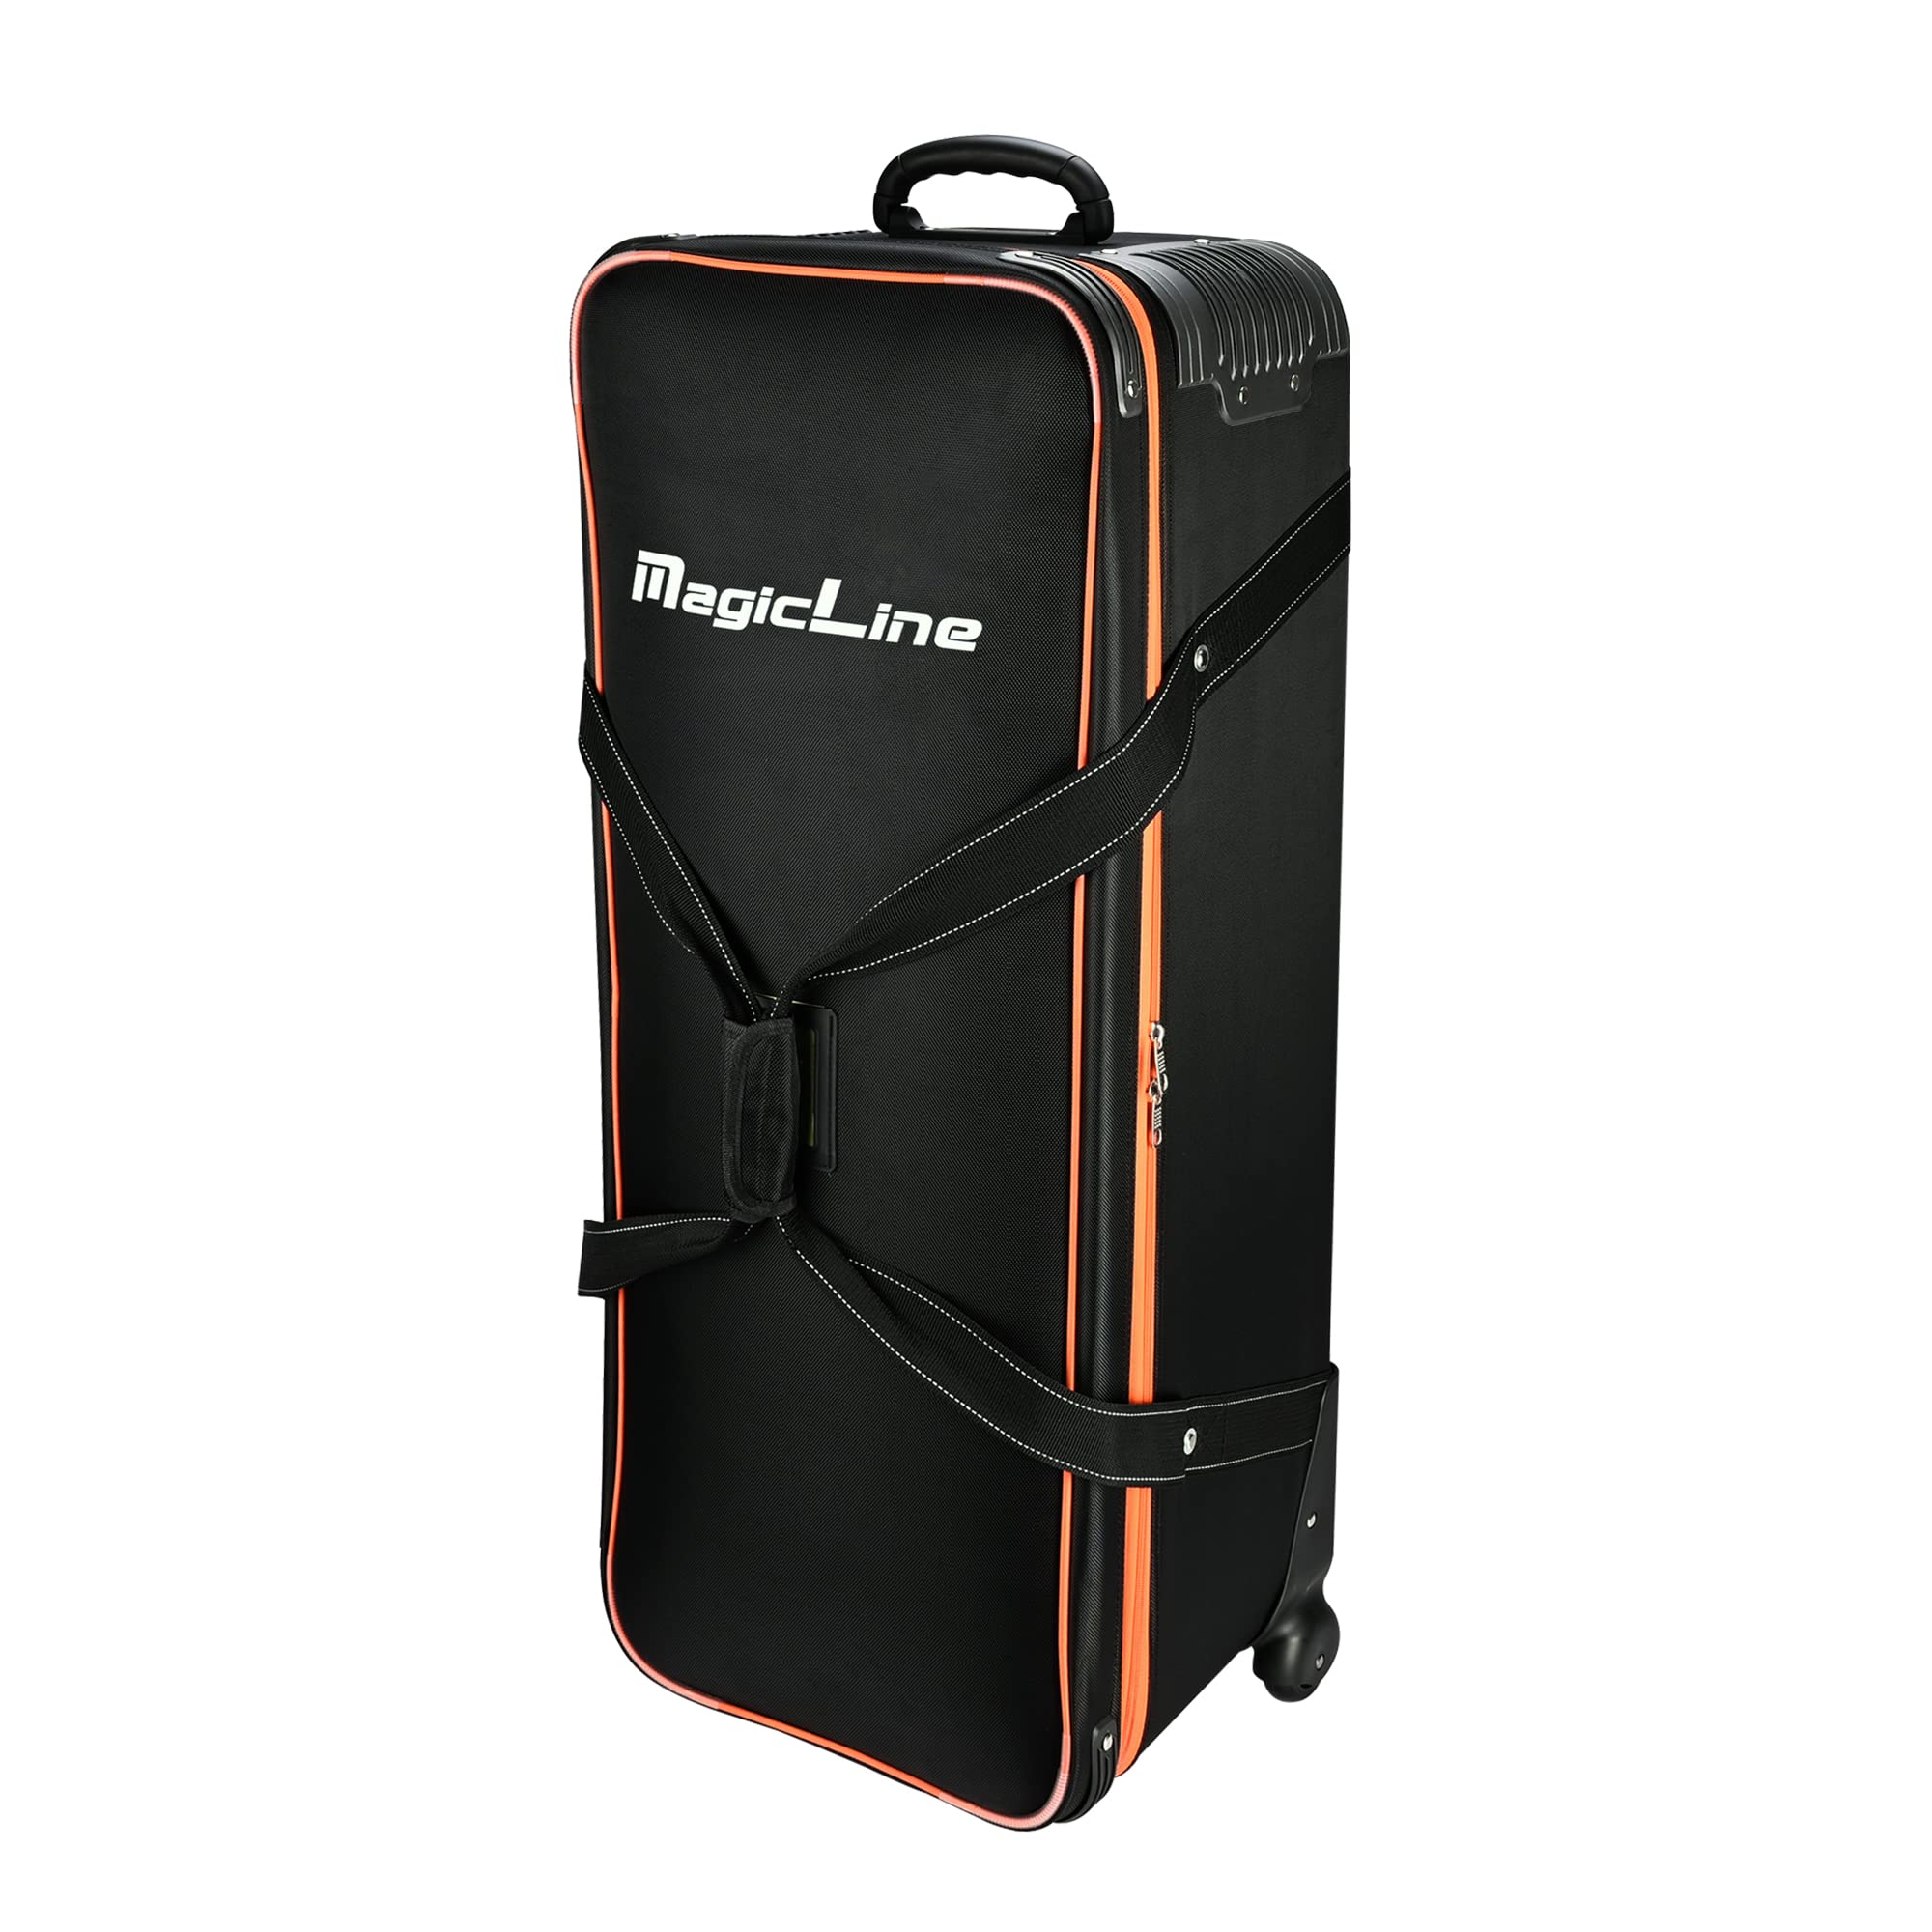 MagicLine Studio Equipment Trolley Case 39.4